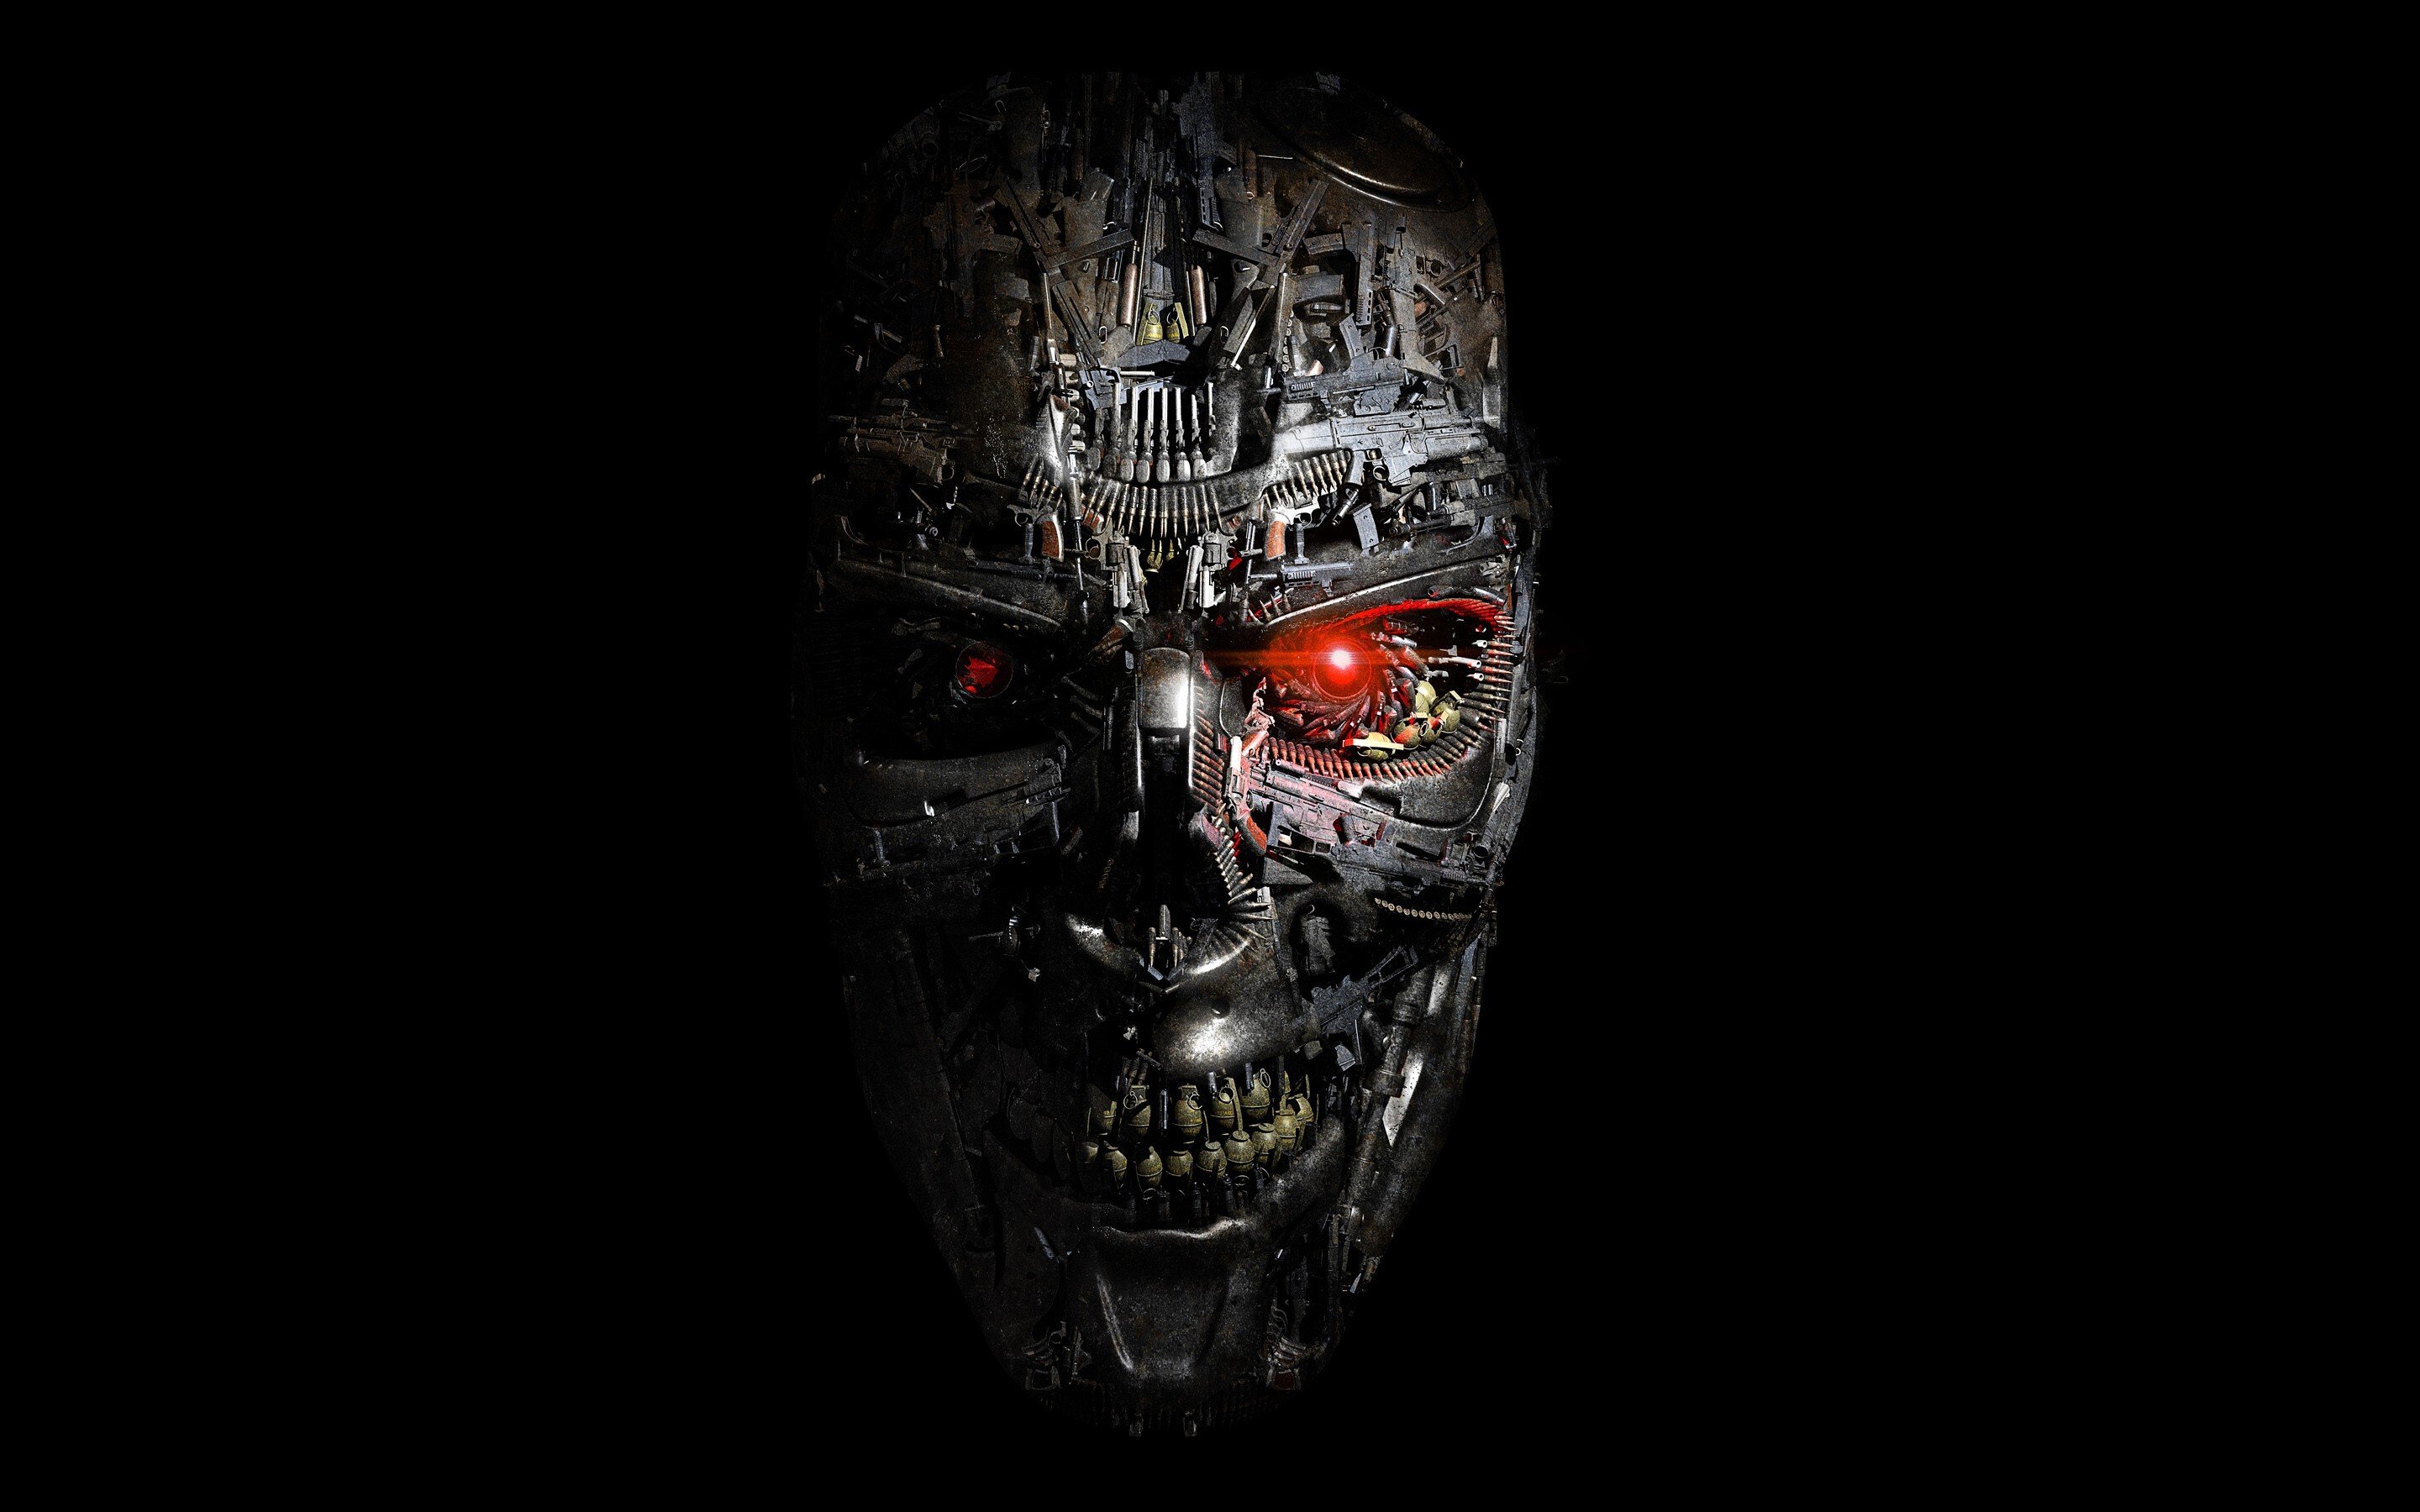 Terminator Genisys Robot Macbook Pro Retina HD 4k Wallpaper, Image, Background, Photo and Picture